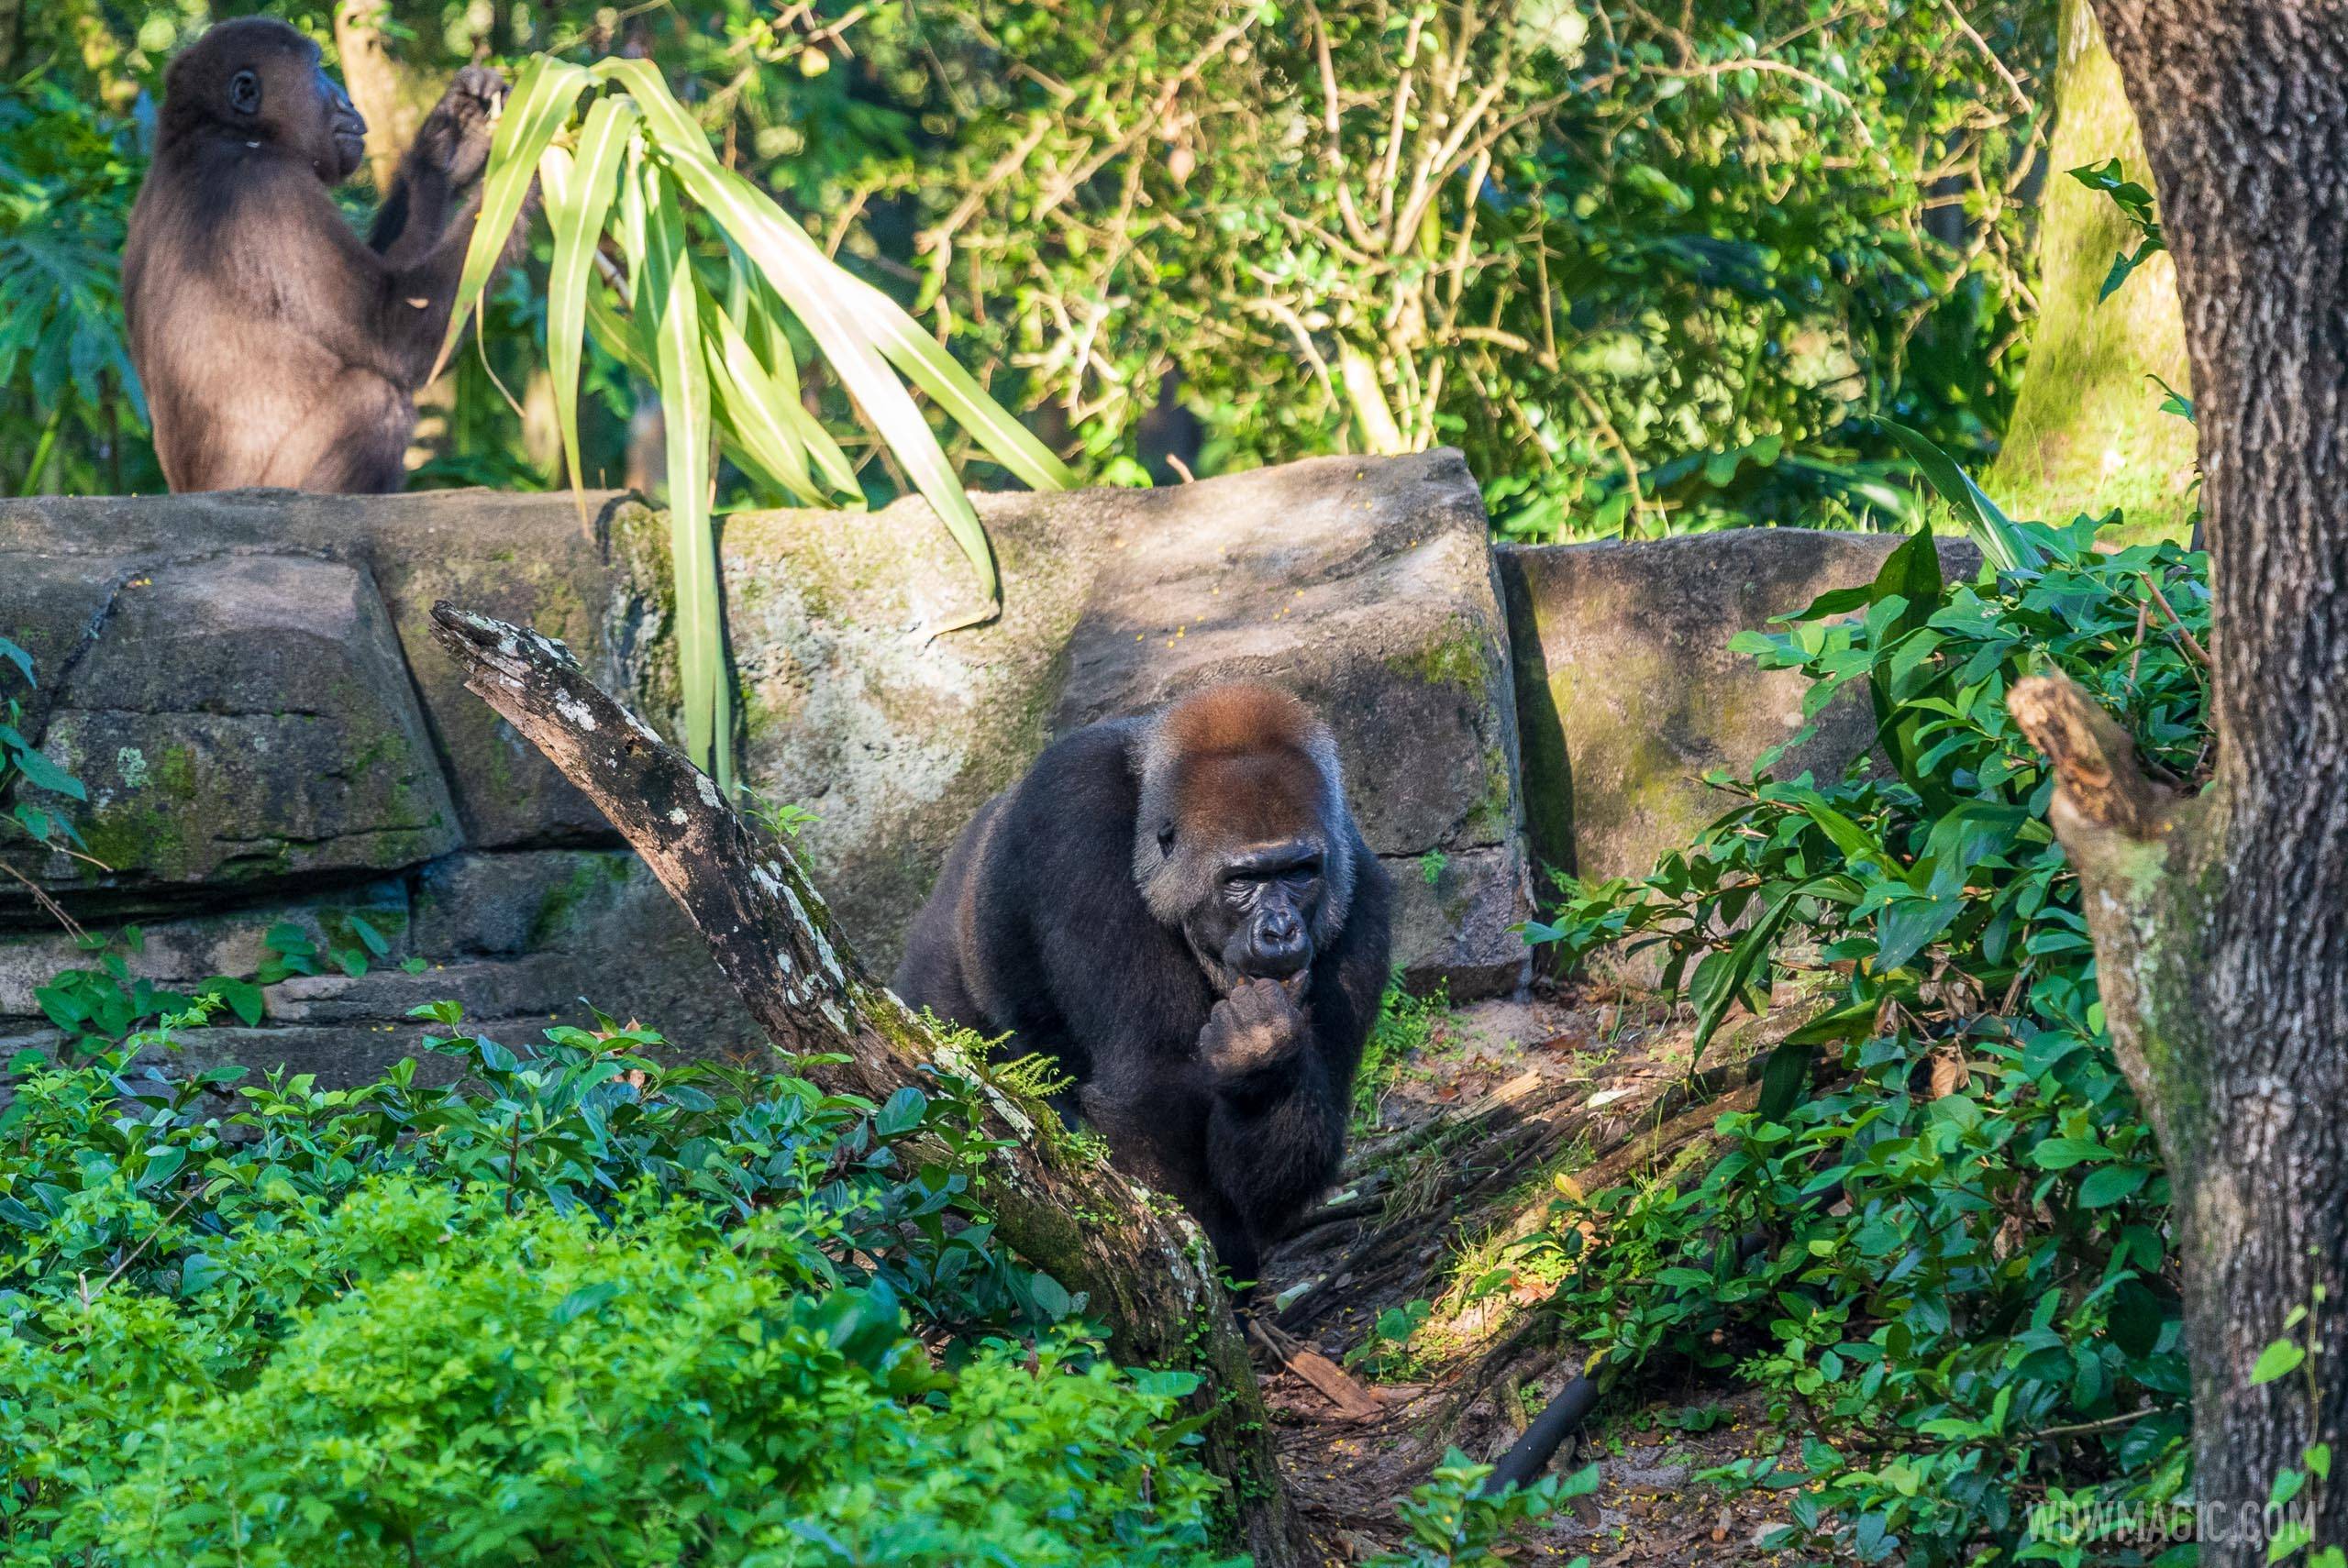 Gorilla Falls Exploration Trail